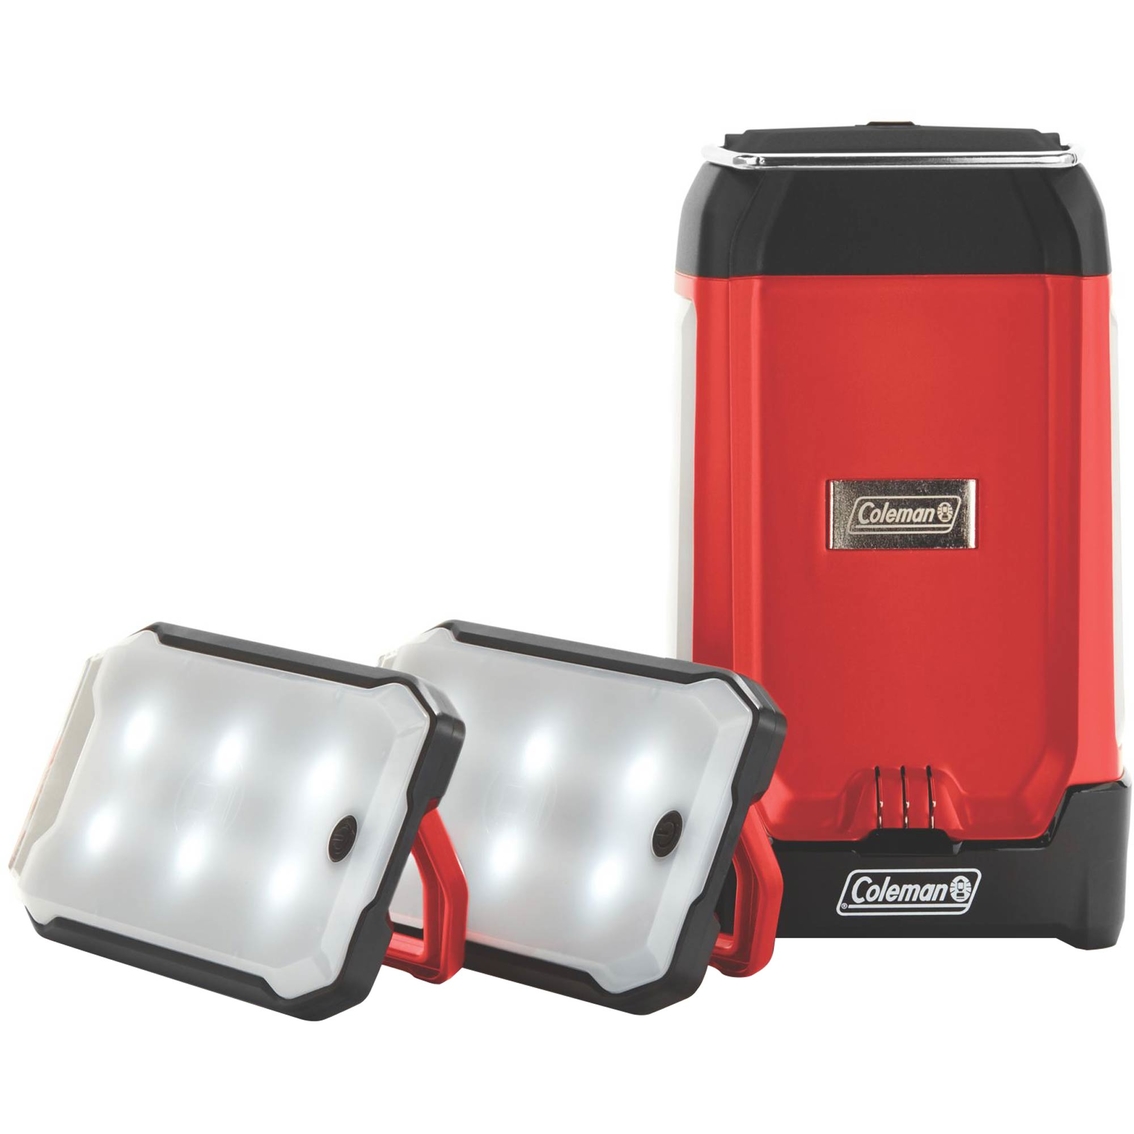 Camping Station - Coleman Quad 8-D Battery LED Lantern